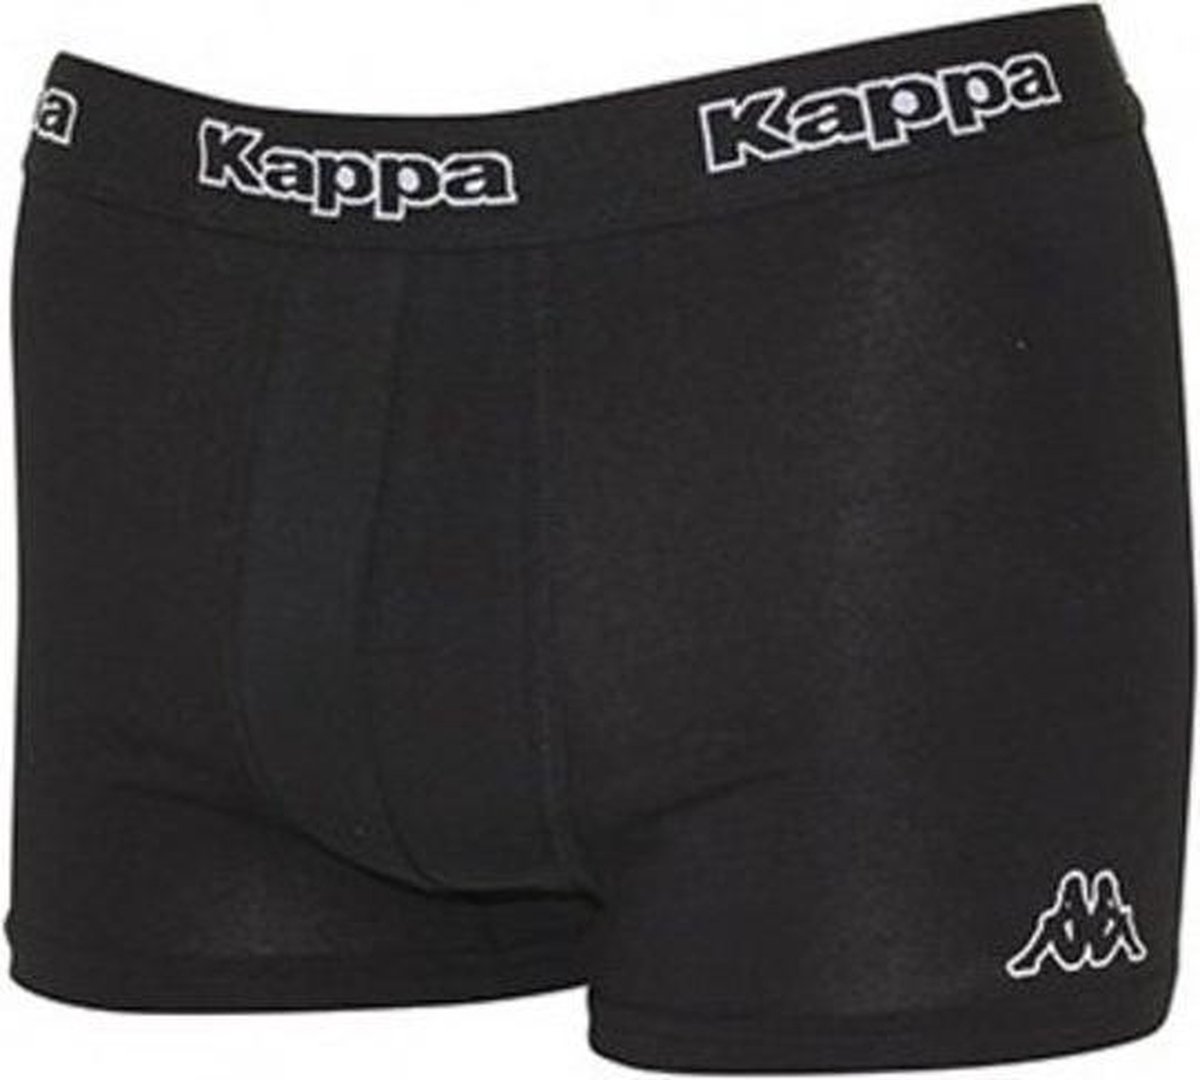 Productie Labe Overtreffen Kappa boxershort XL | bol.com